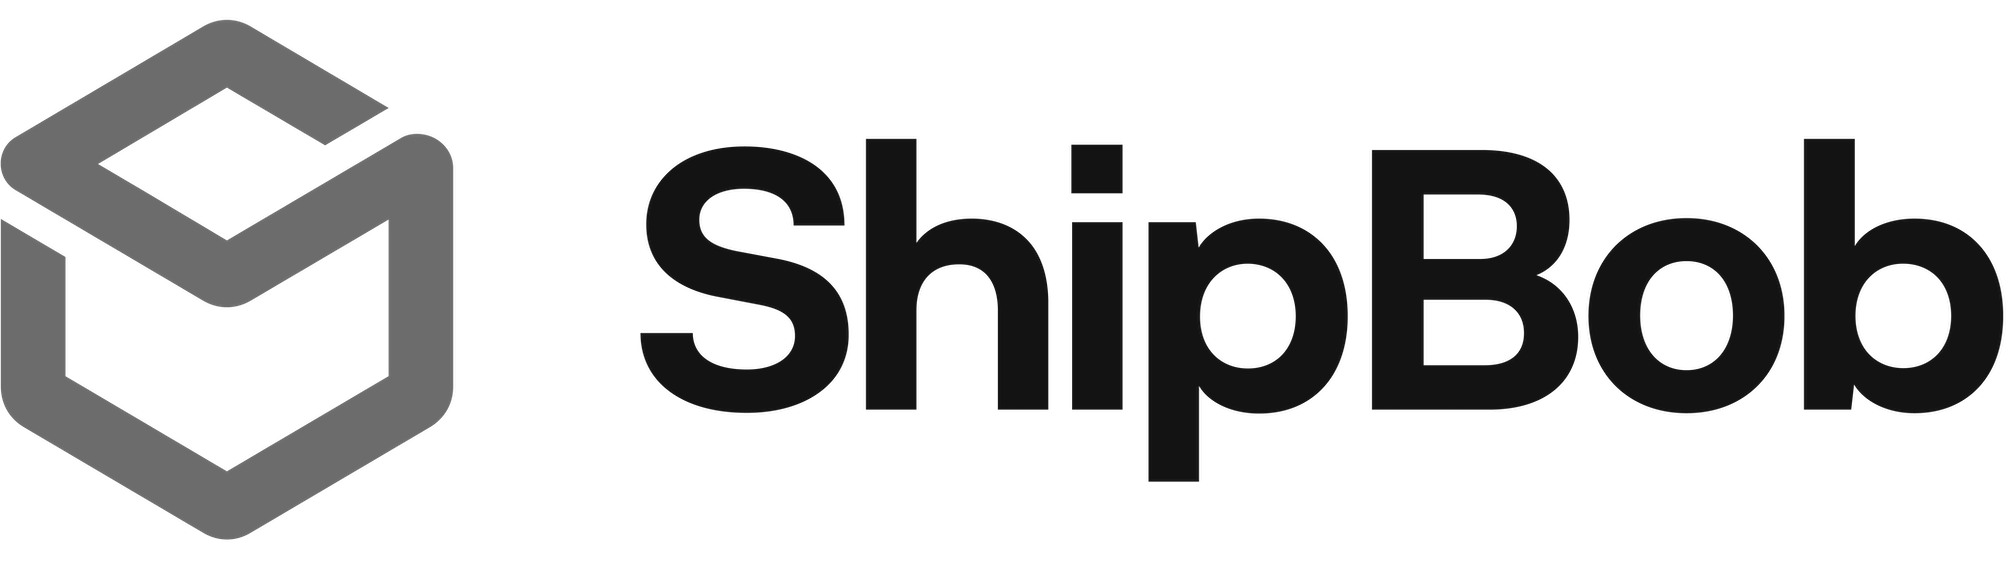 shipbob logo bw